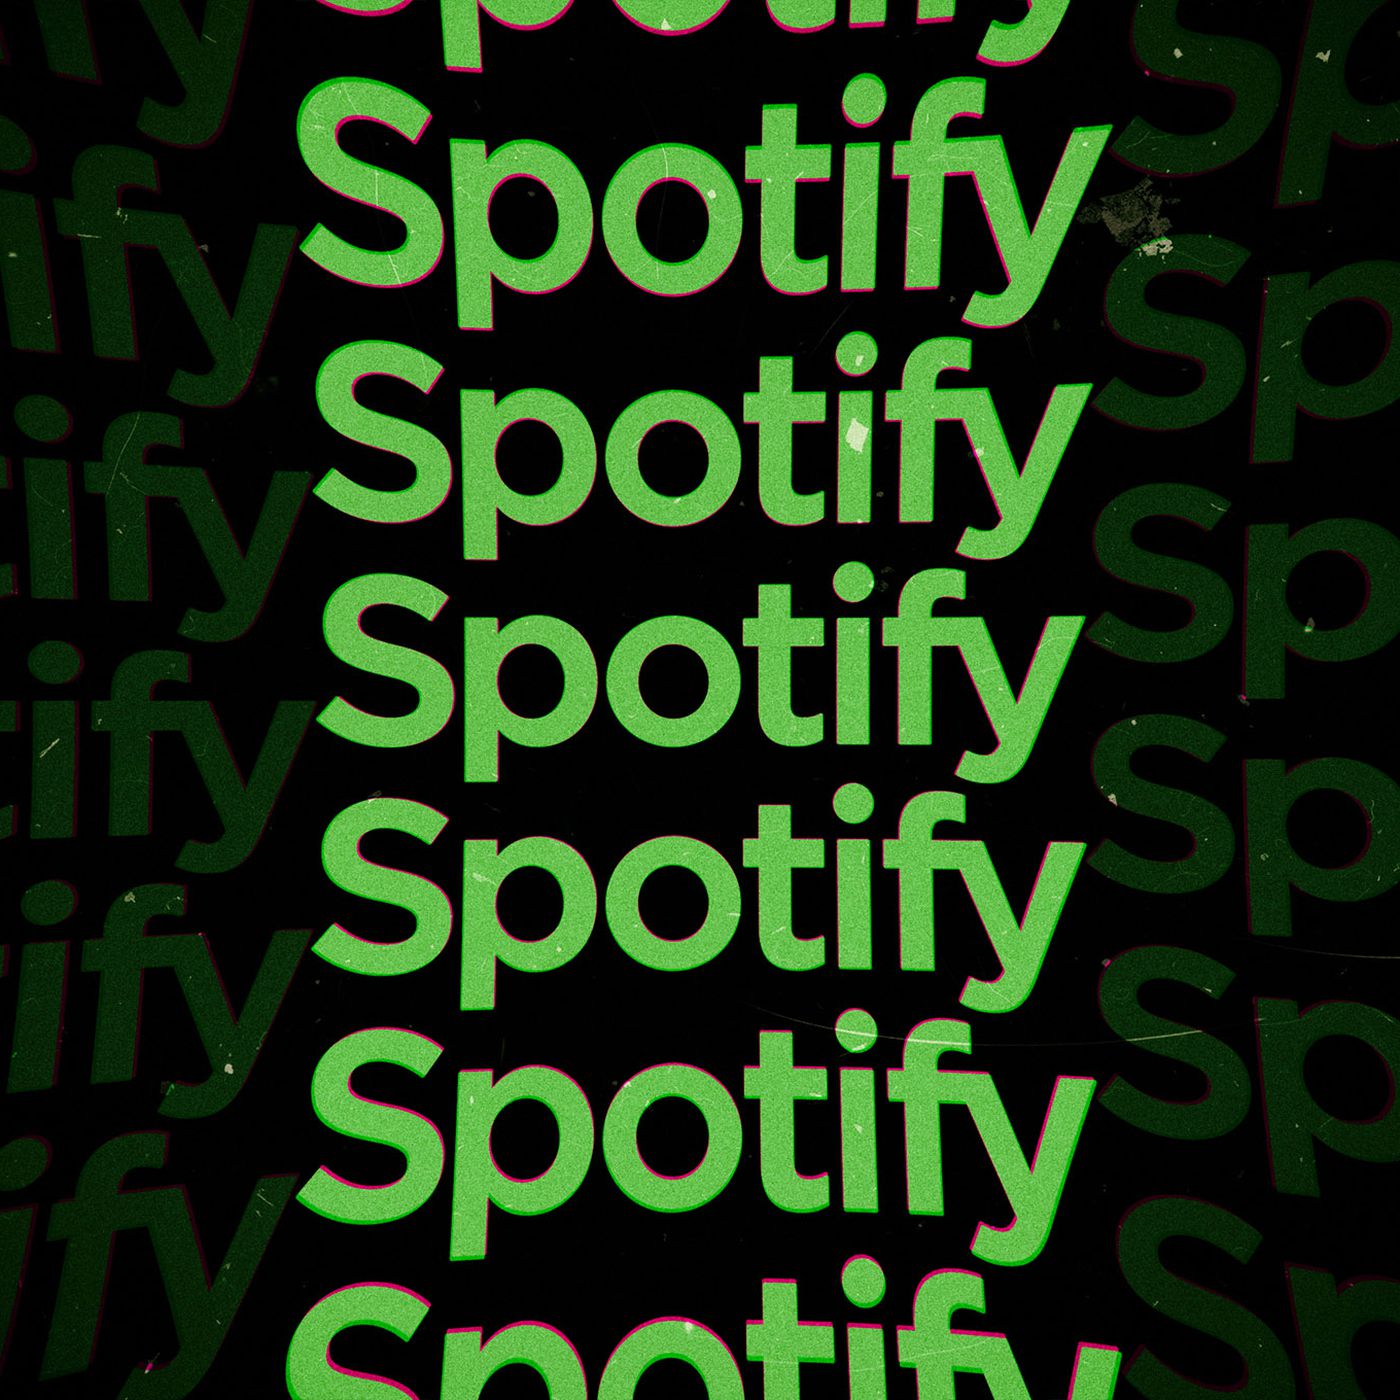 26+] Spotify Background - WallpaperSafari